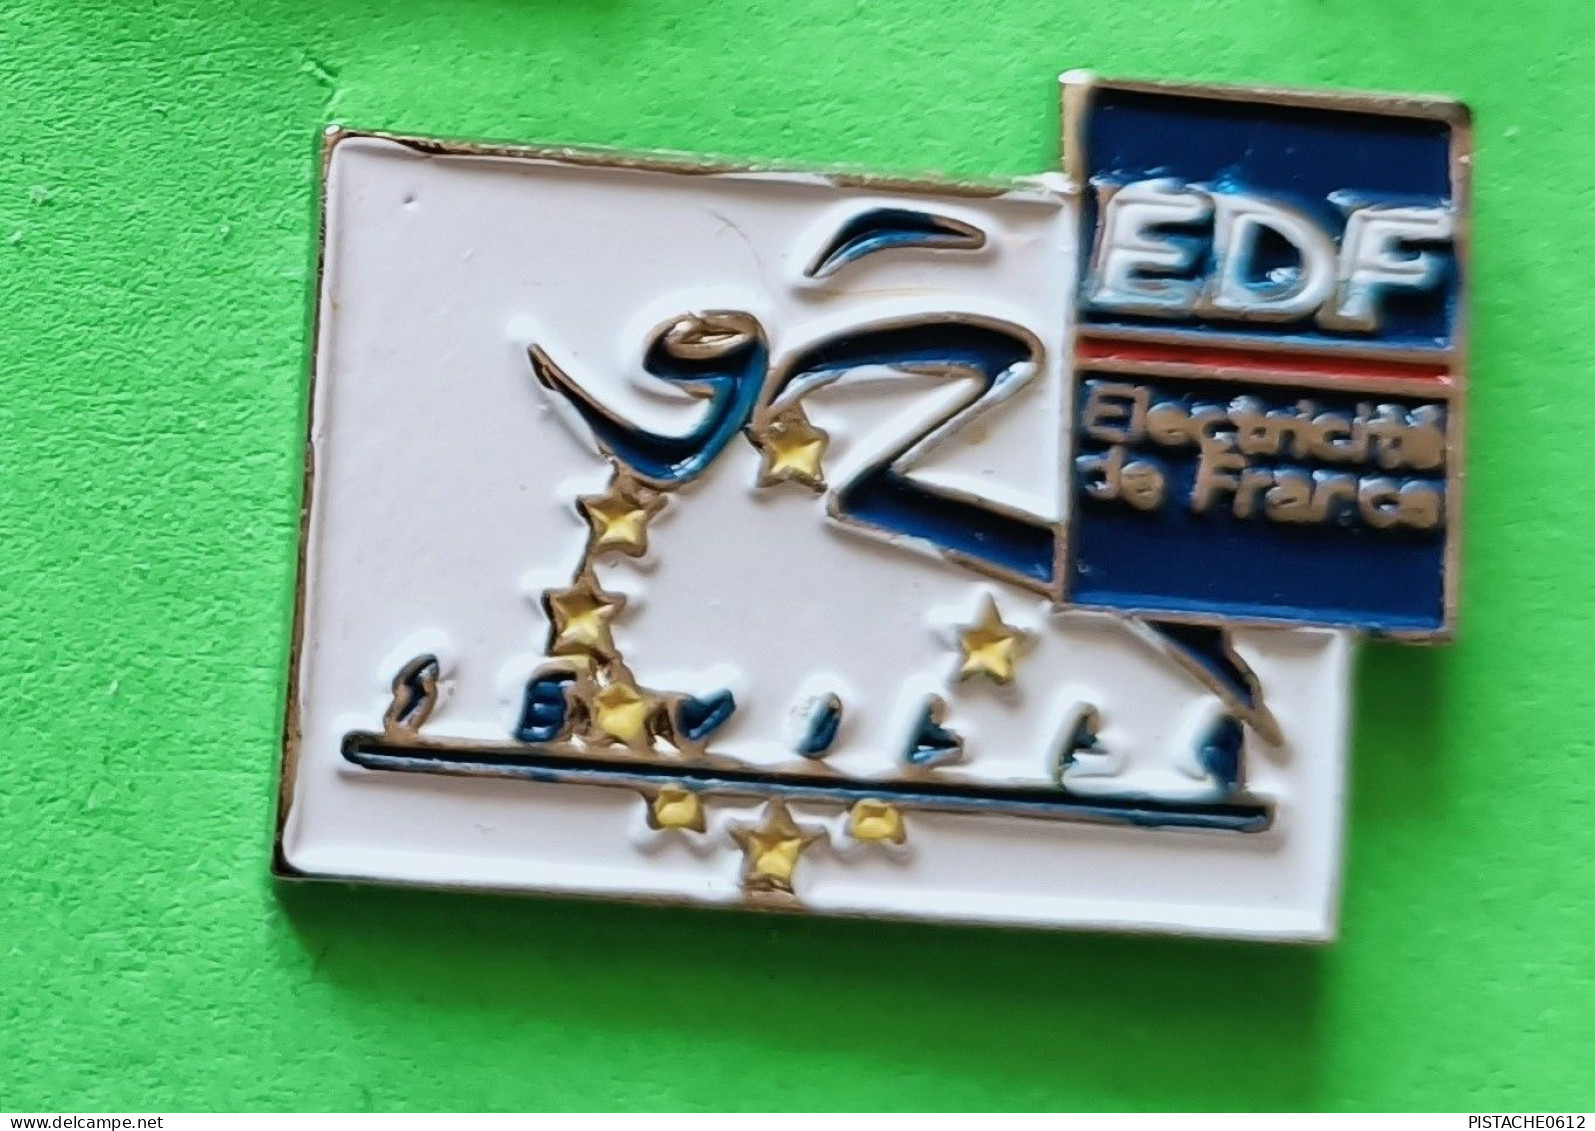 Pin's EDF Sevilla 92 - EDF GDF